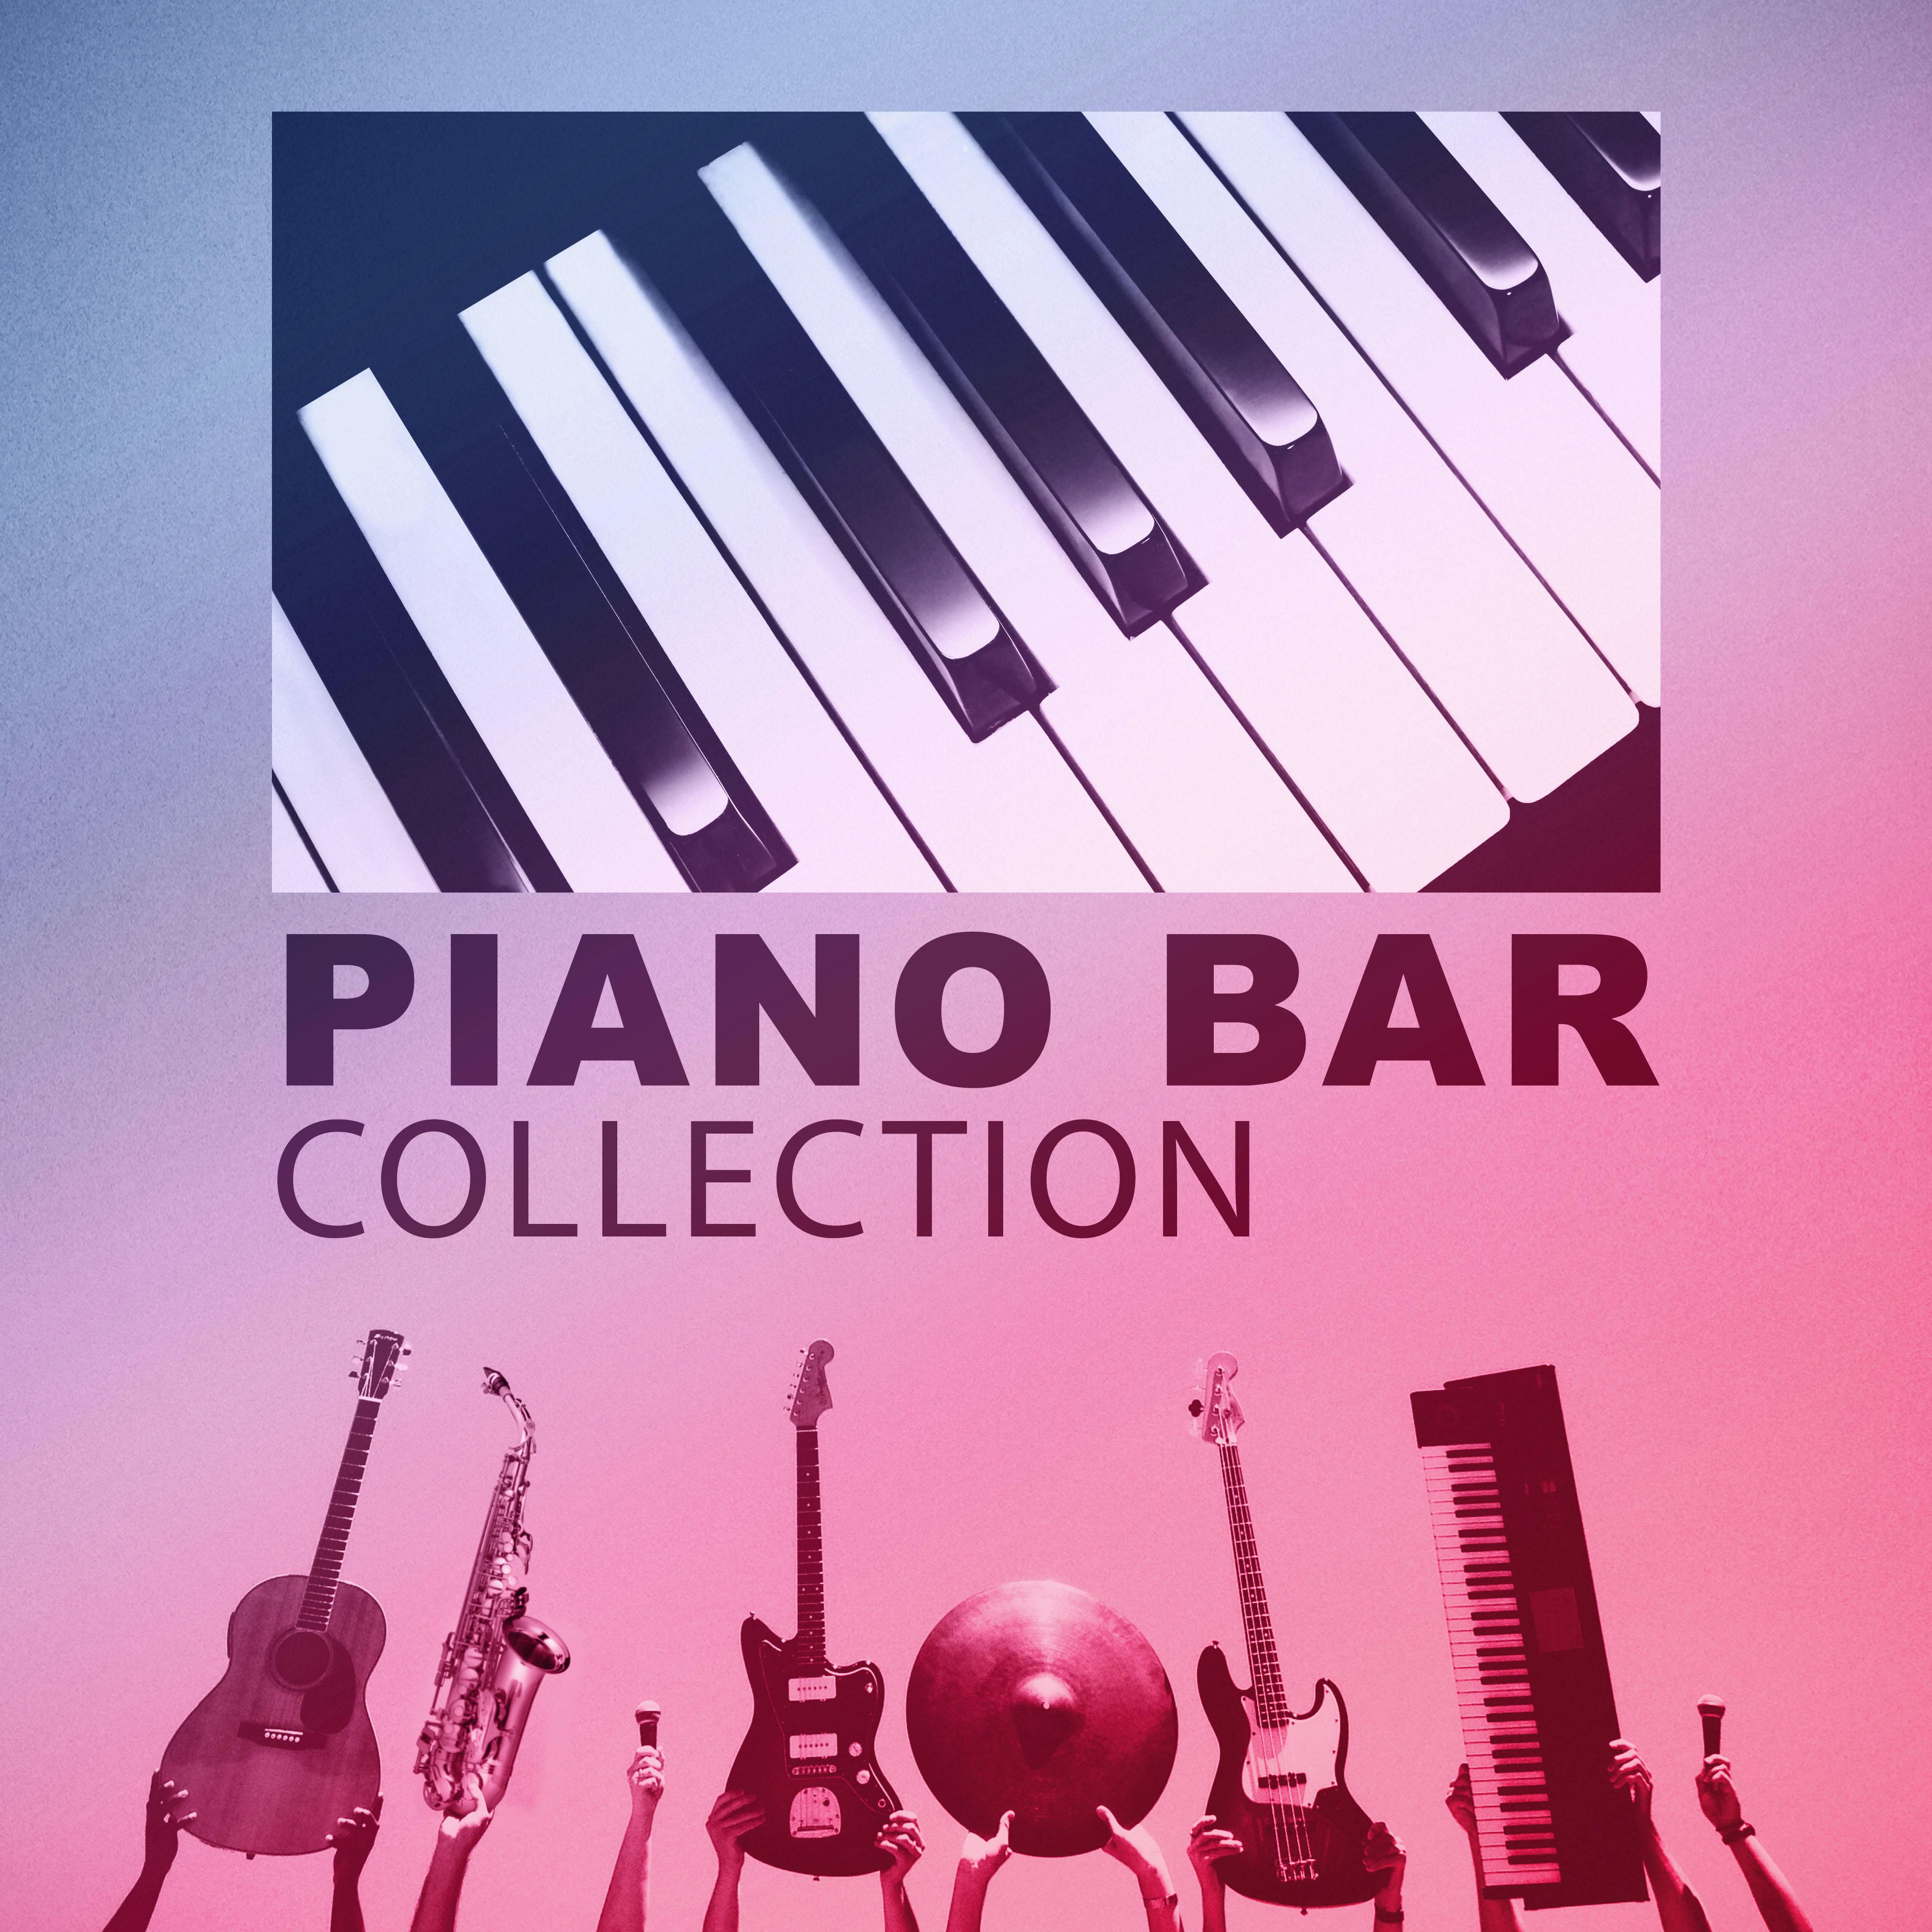 Piano Bar Collection - Jazz Piano Bar & Restaurant, Piano Background Music, Night Piano Music